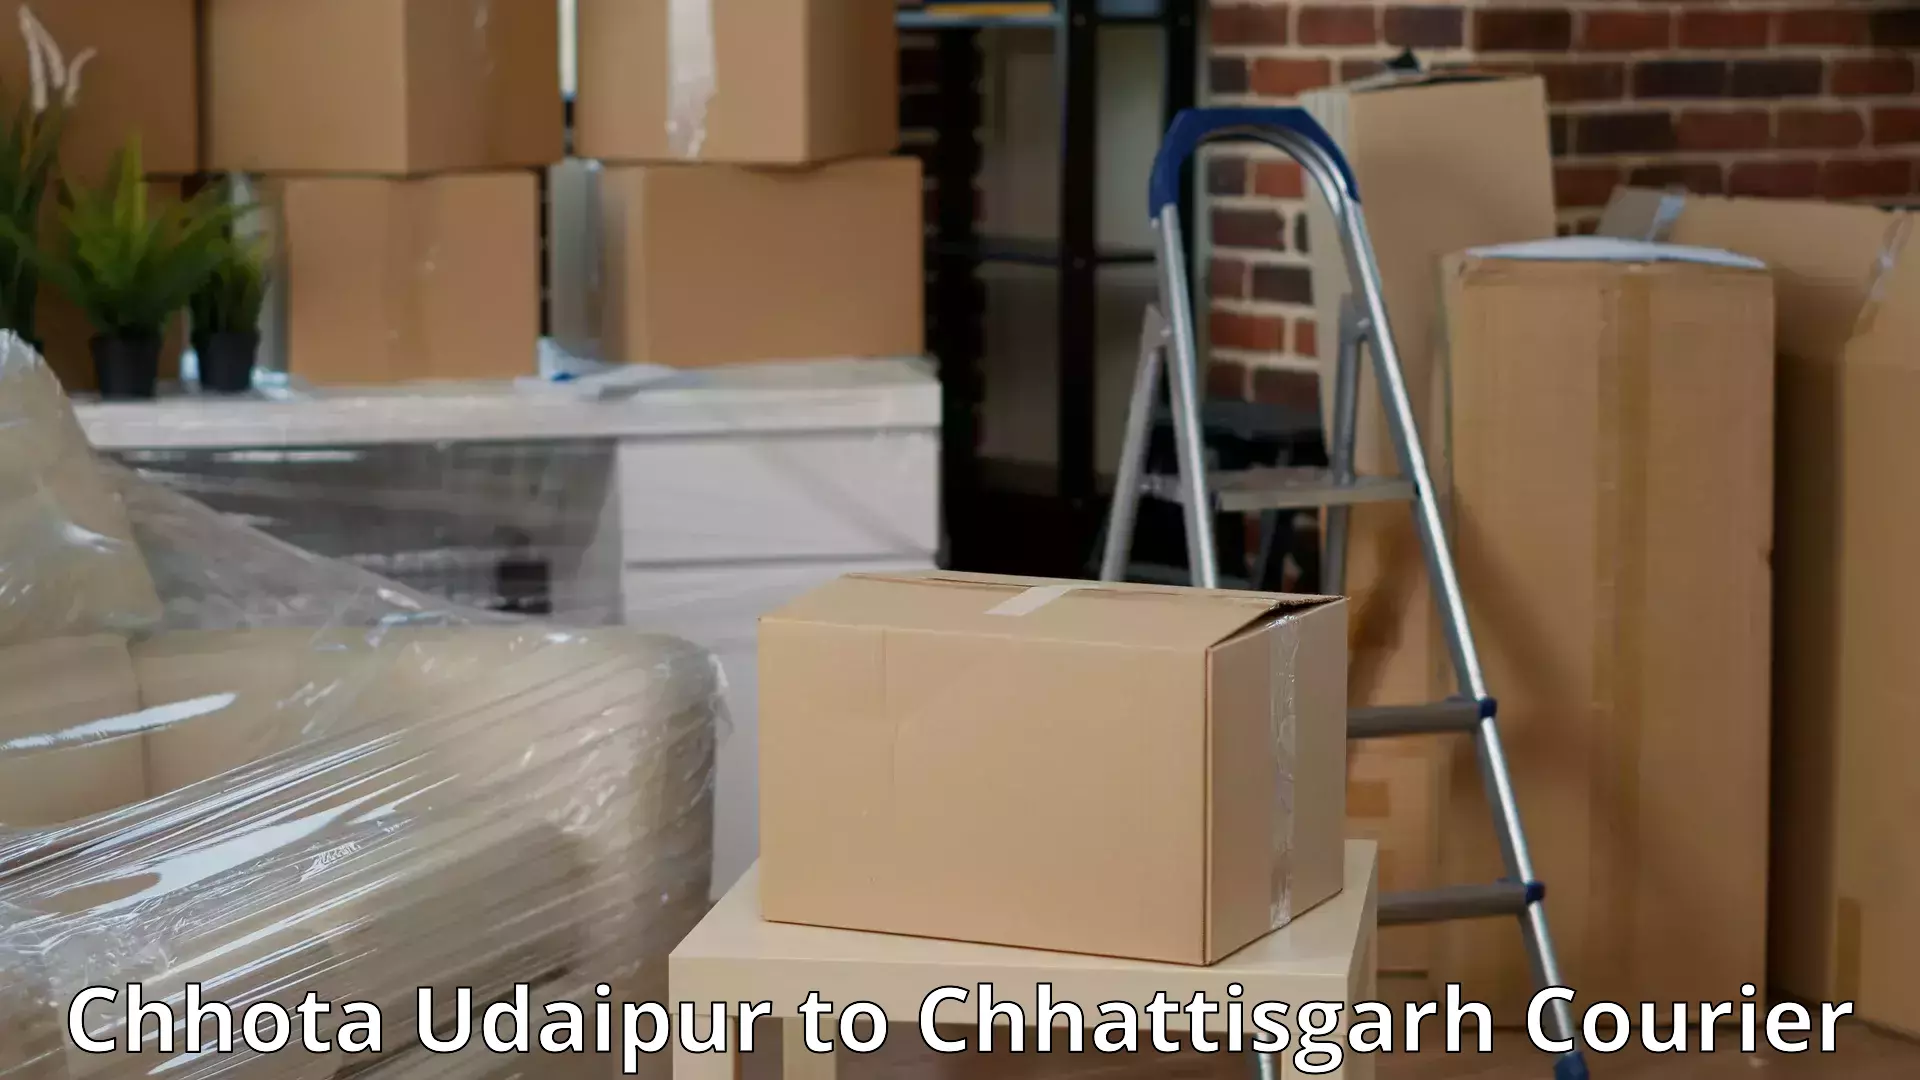 Quality moving and storage Chhota Udaipur to Patna Chhattisgarh